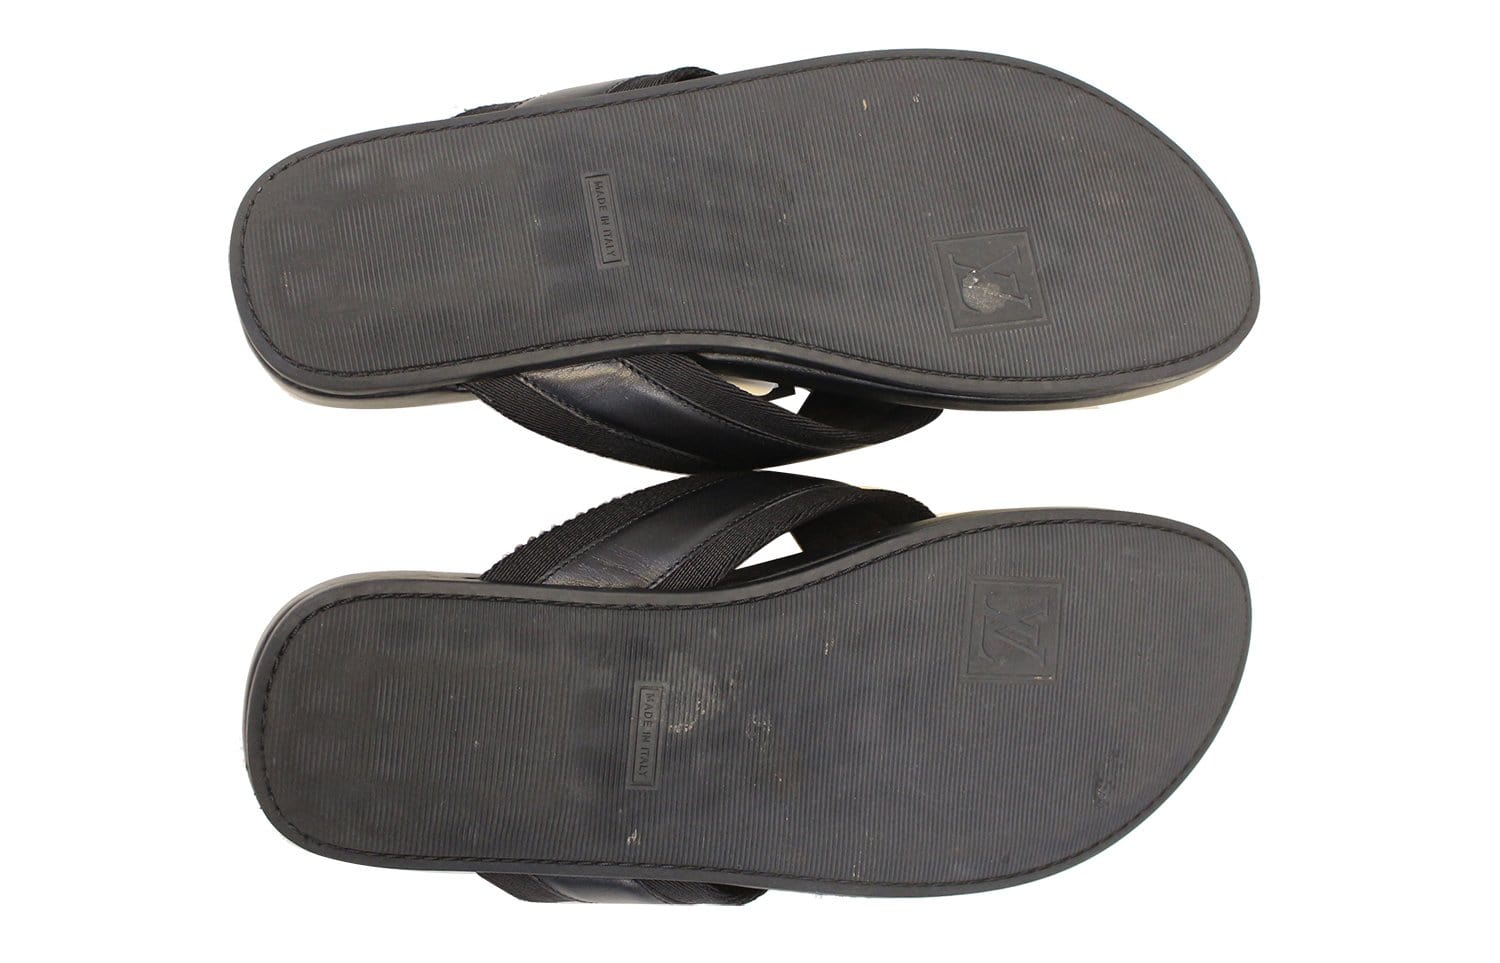 Louis Vuitton Sandals & Flip-Flops for Men - Poshmark